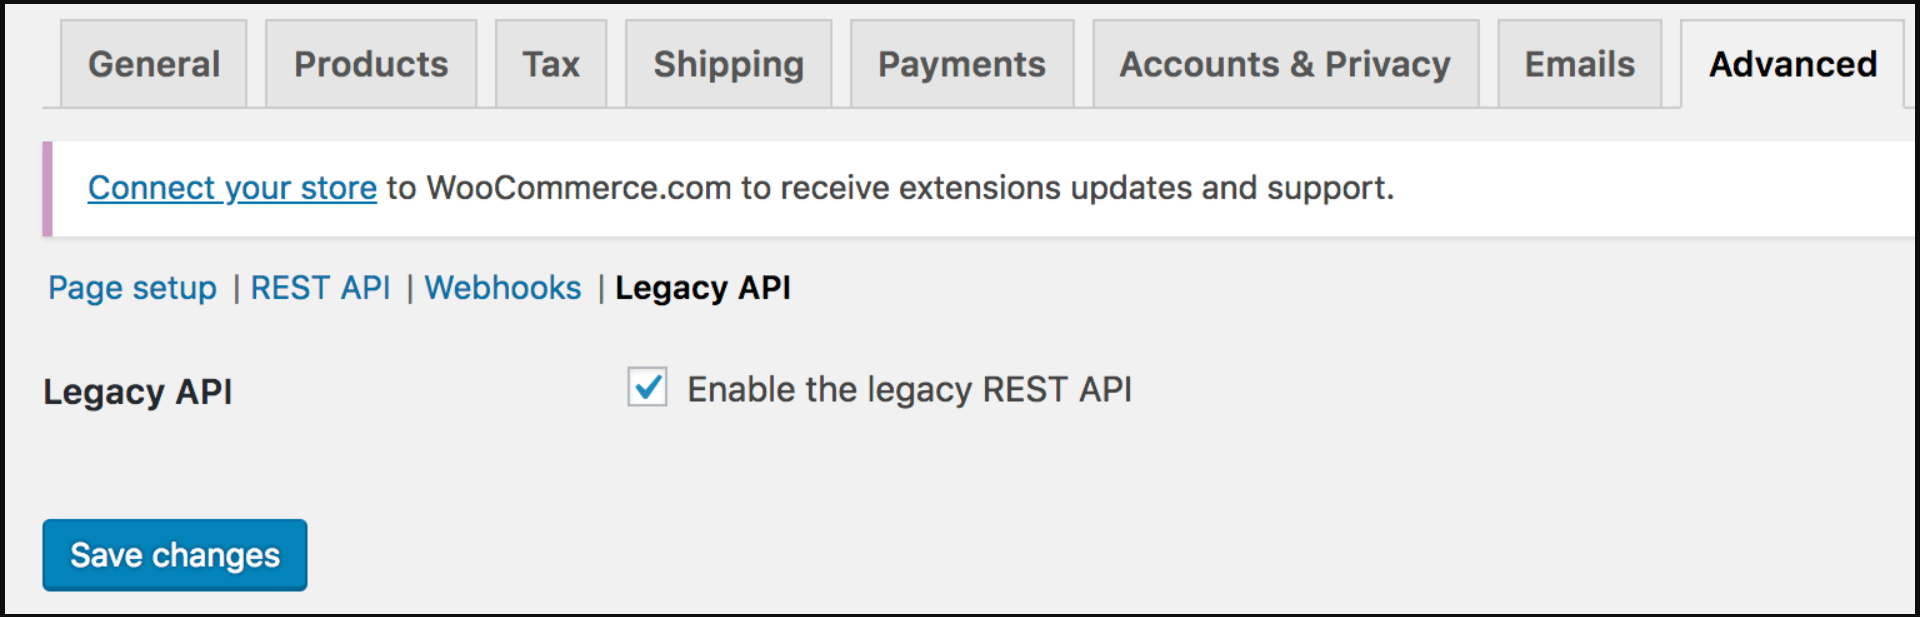 Legacy_API.PNG